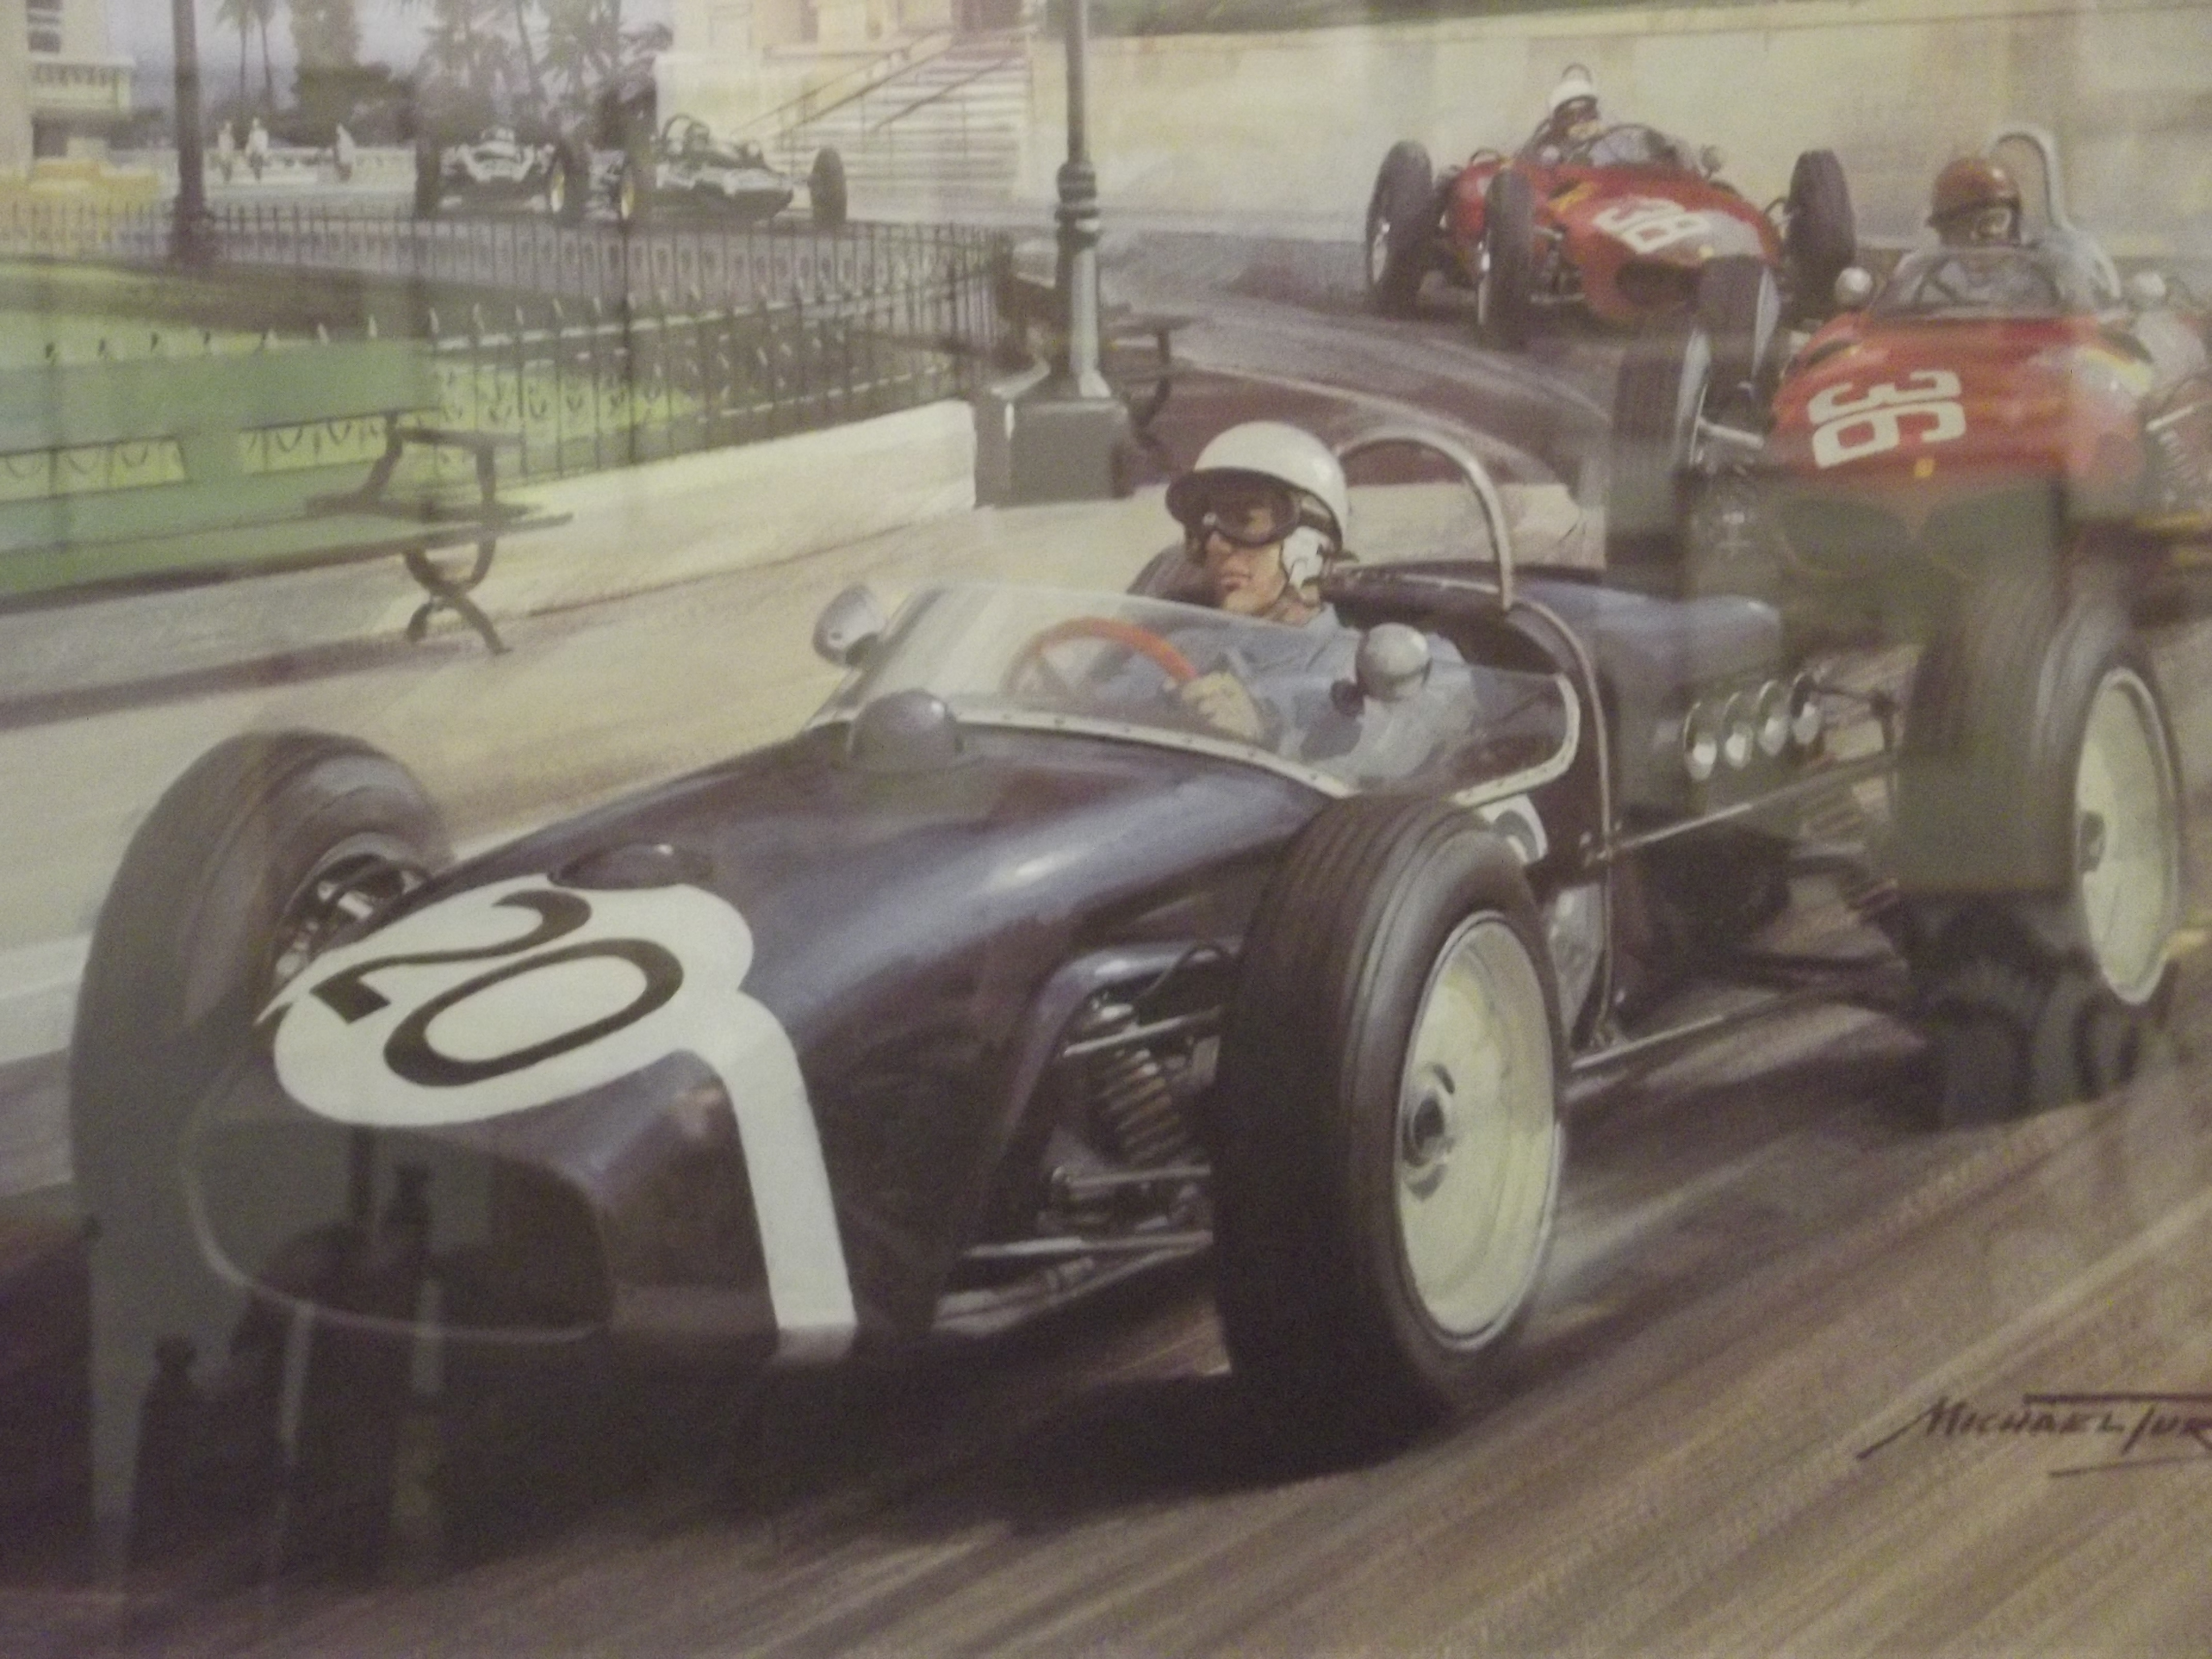 Michael Turner, '1961 Monaco Grand Prix limited ed